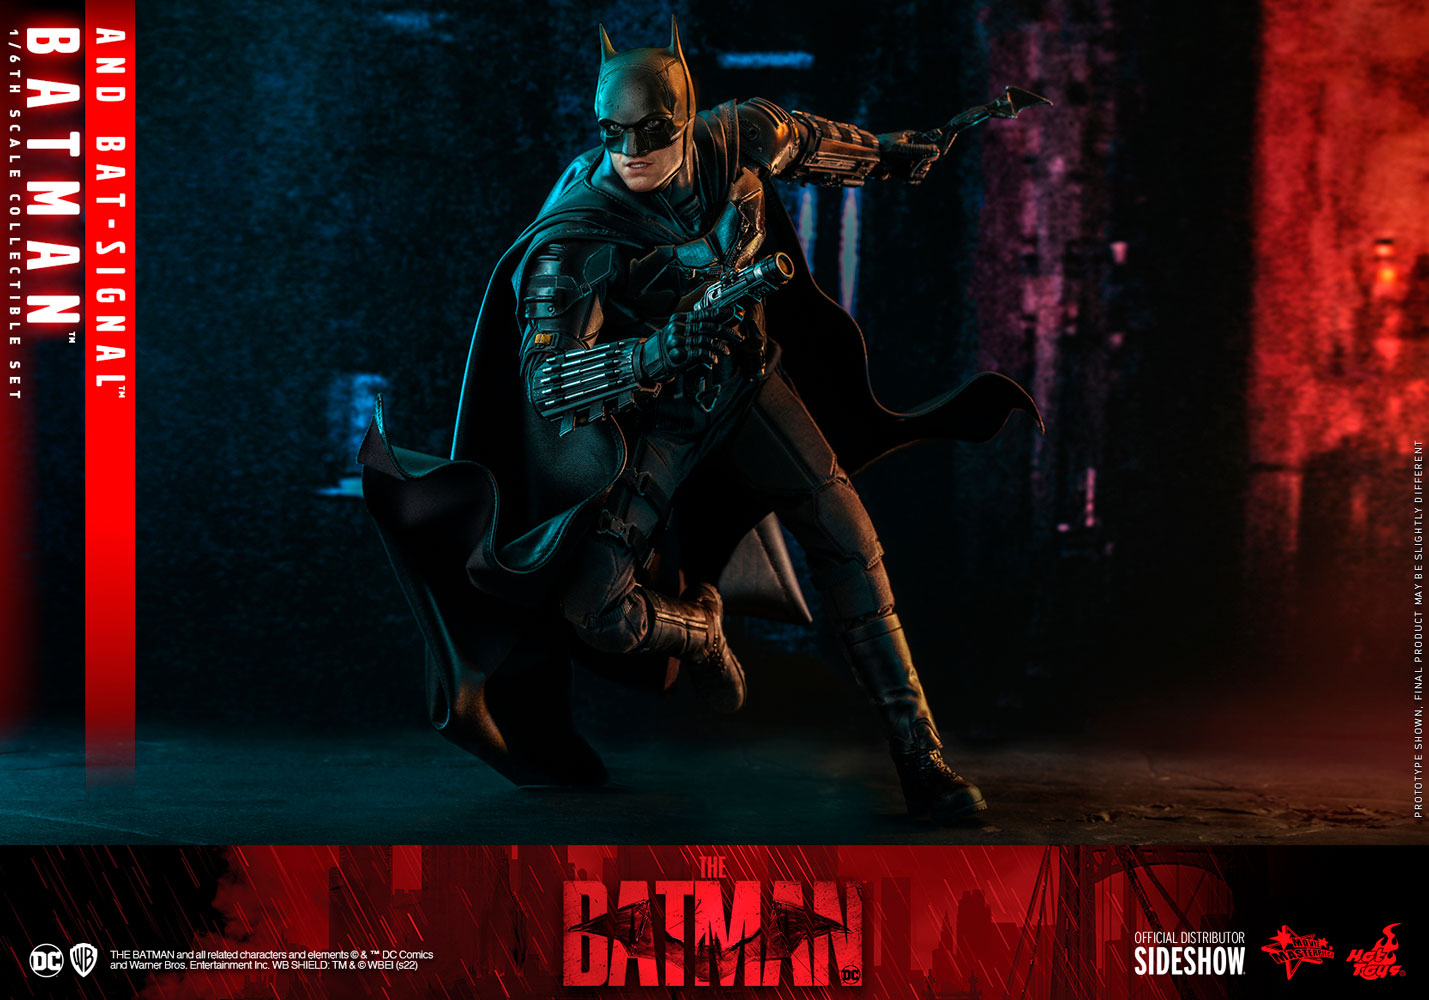 Batman and Bat-Signal Collectible Set - Movie Masterpiece Series - The Batman